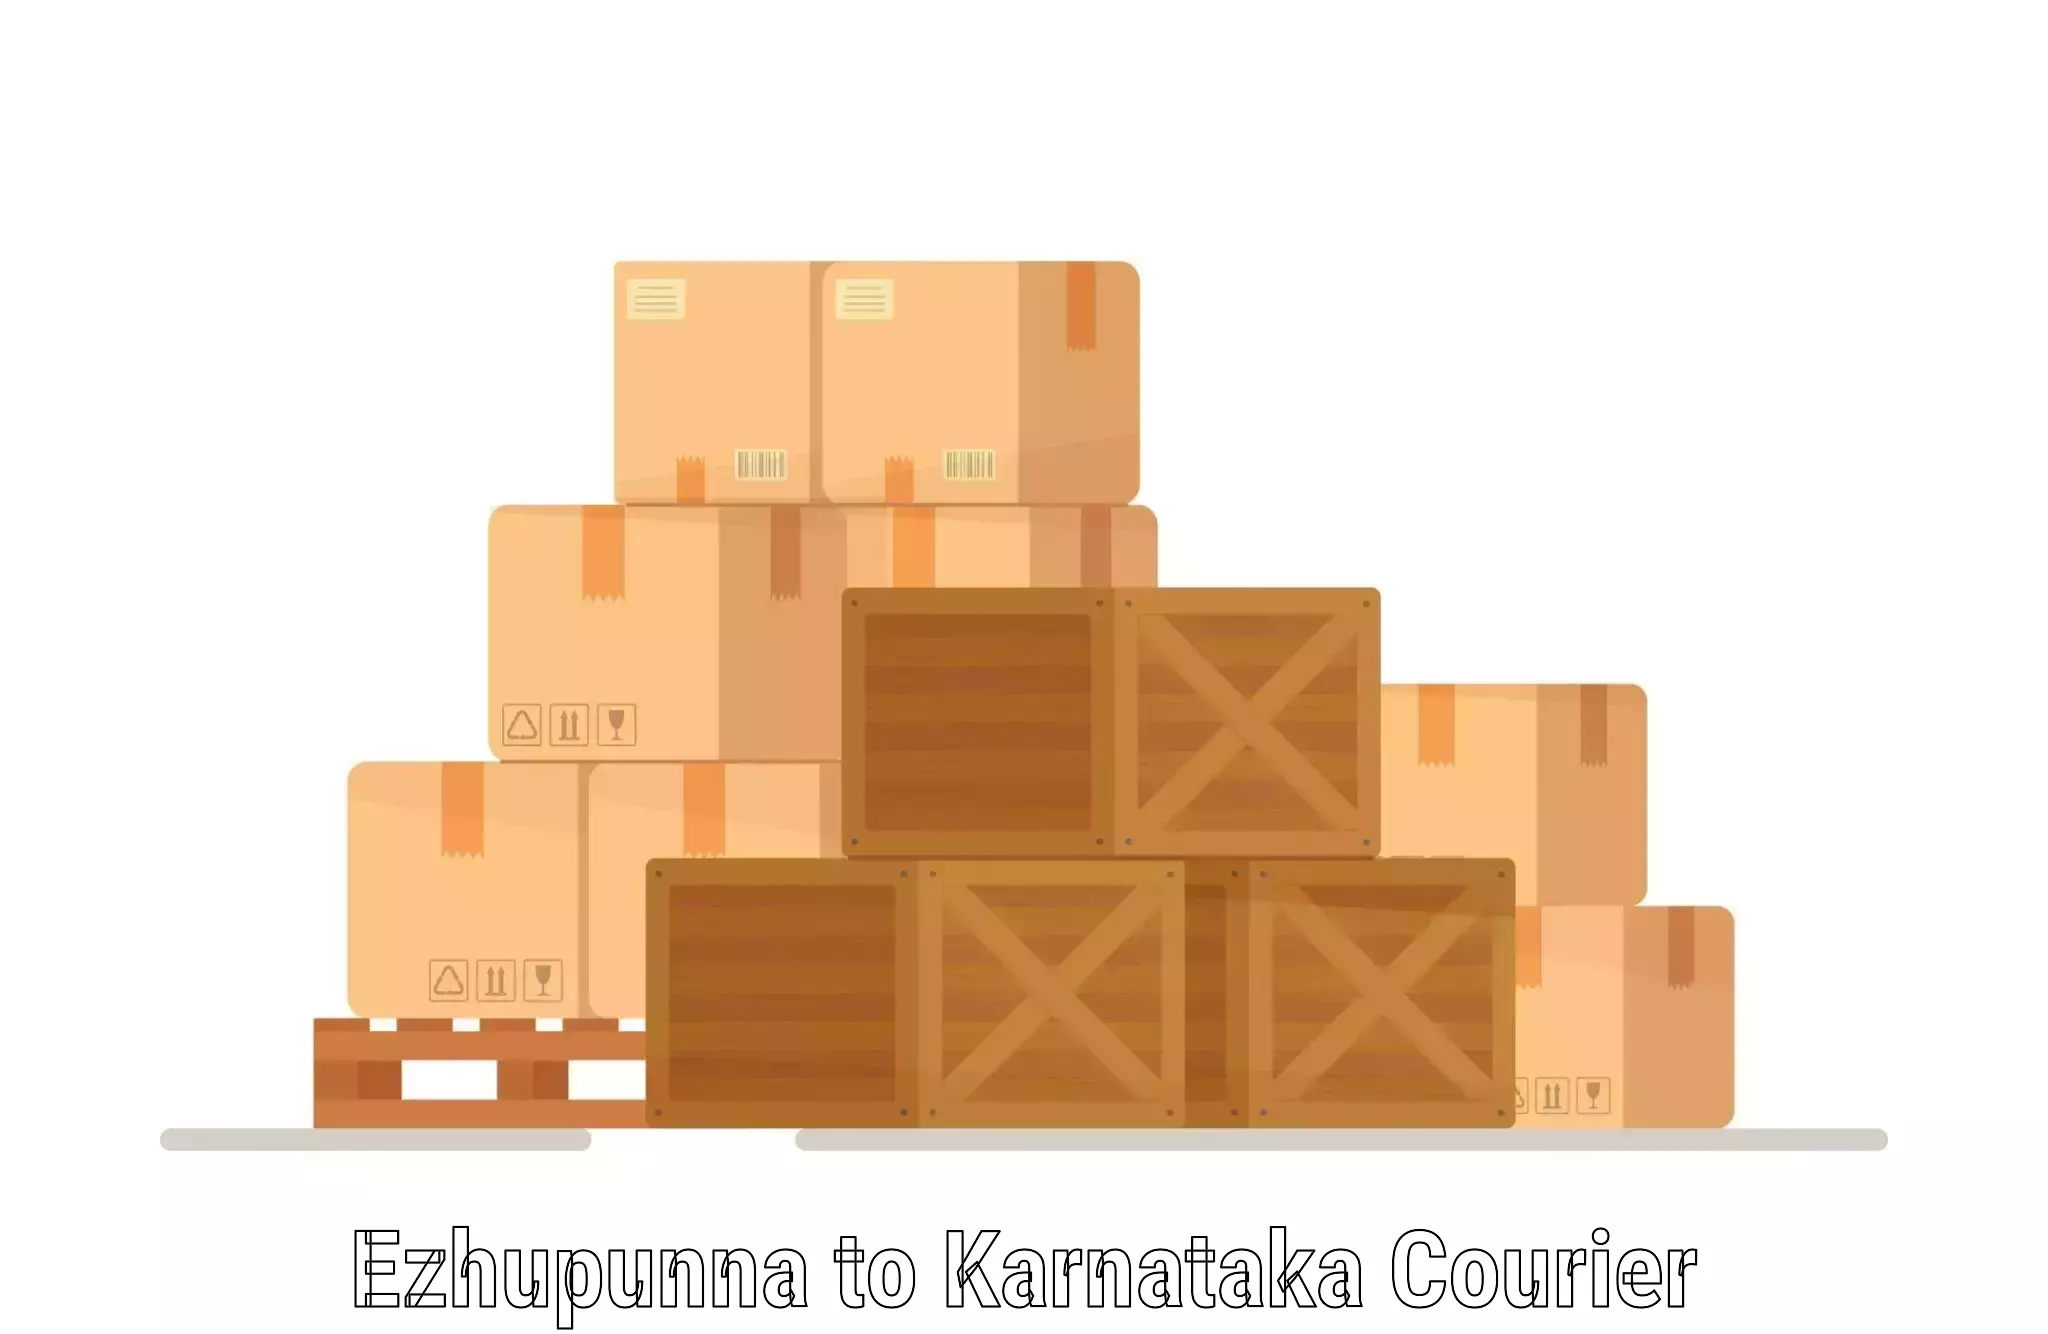 E-commerce fulfillment in Ezhupunna to Mangalore Port